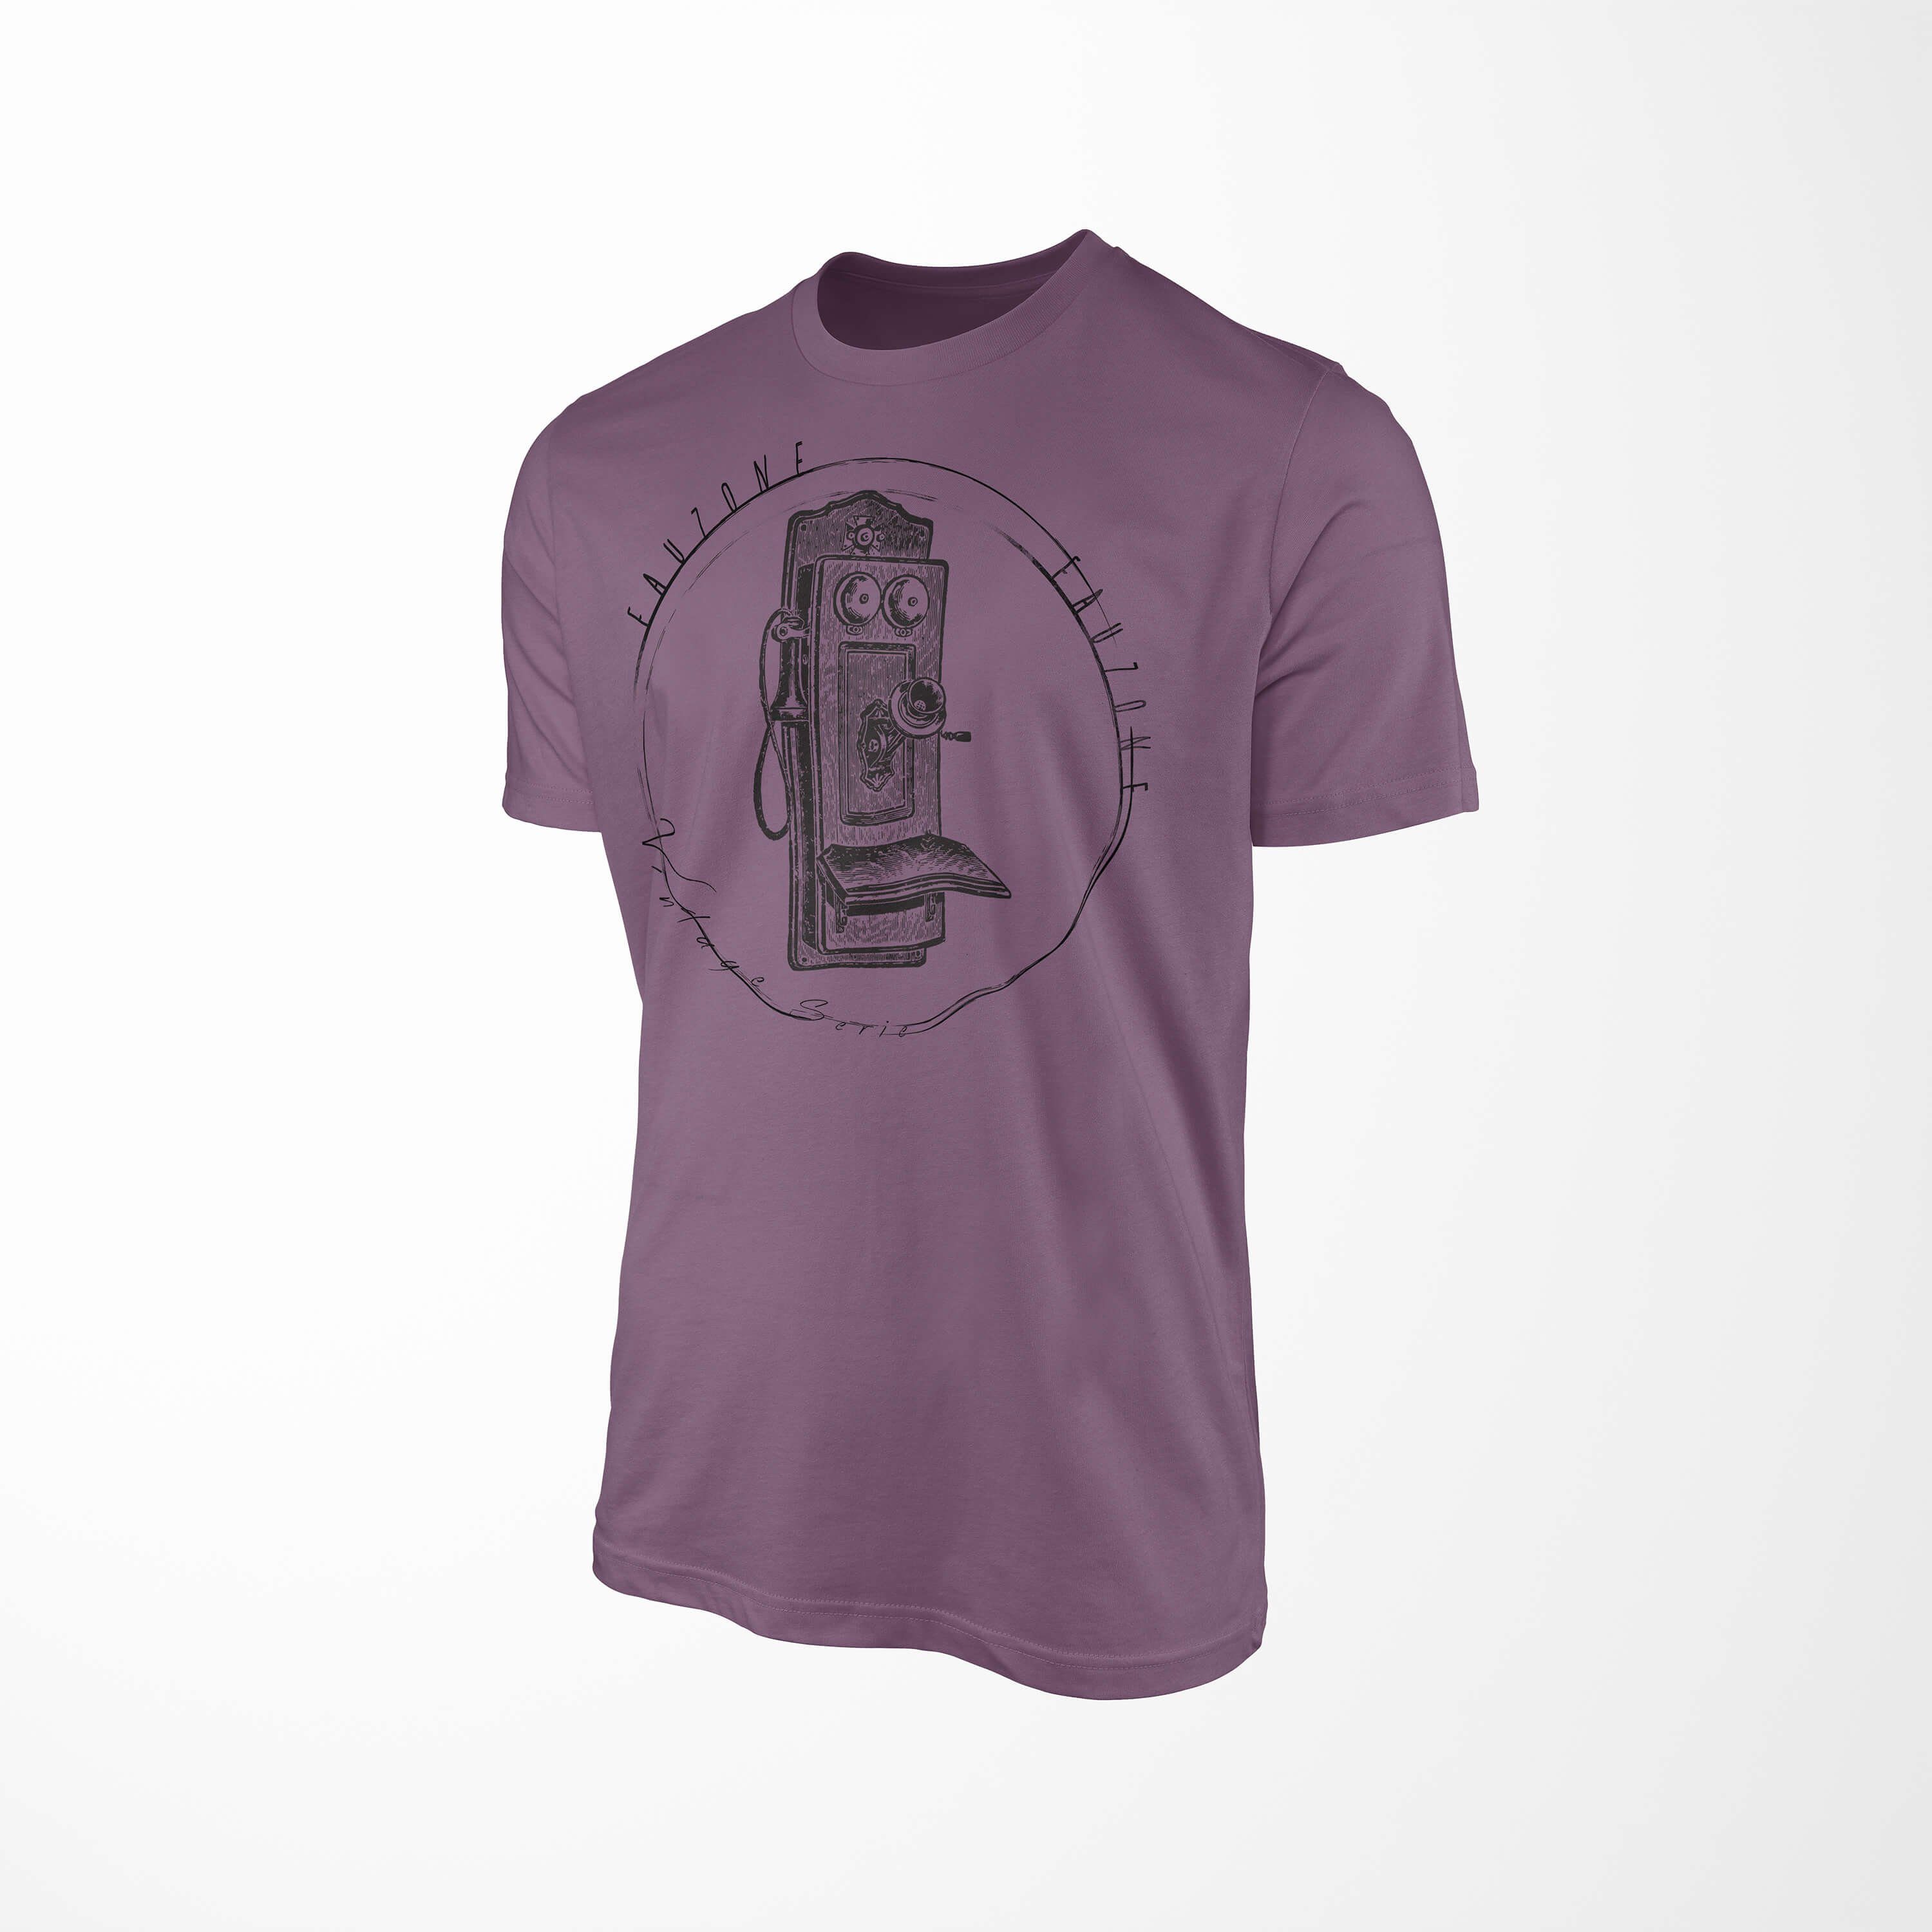 Sinus Art T-Shirt Shiraz Telefonkasten Herren Vintage T-Shirt